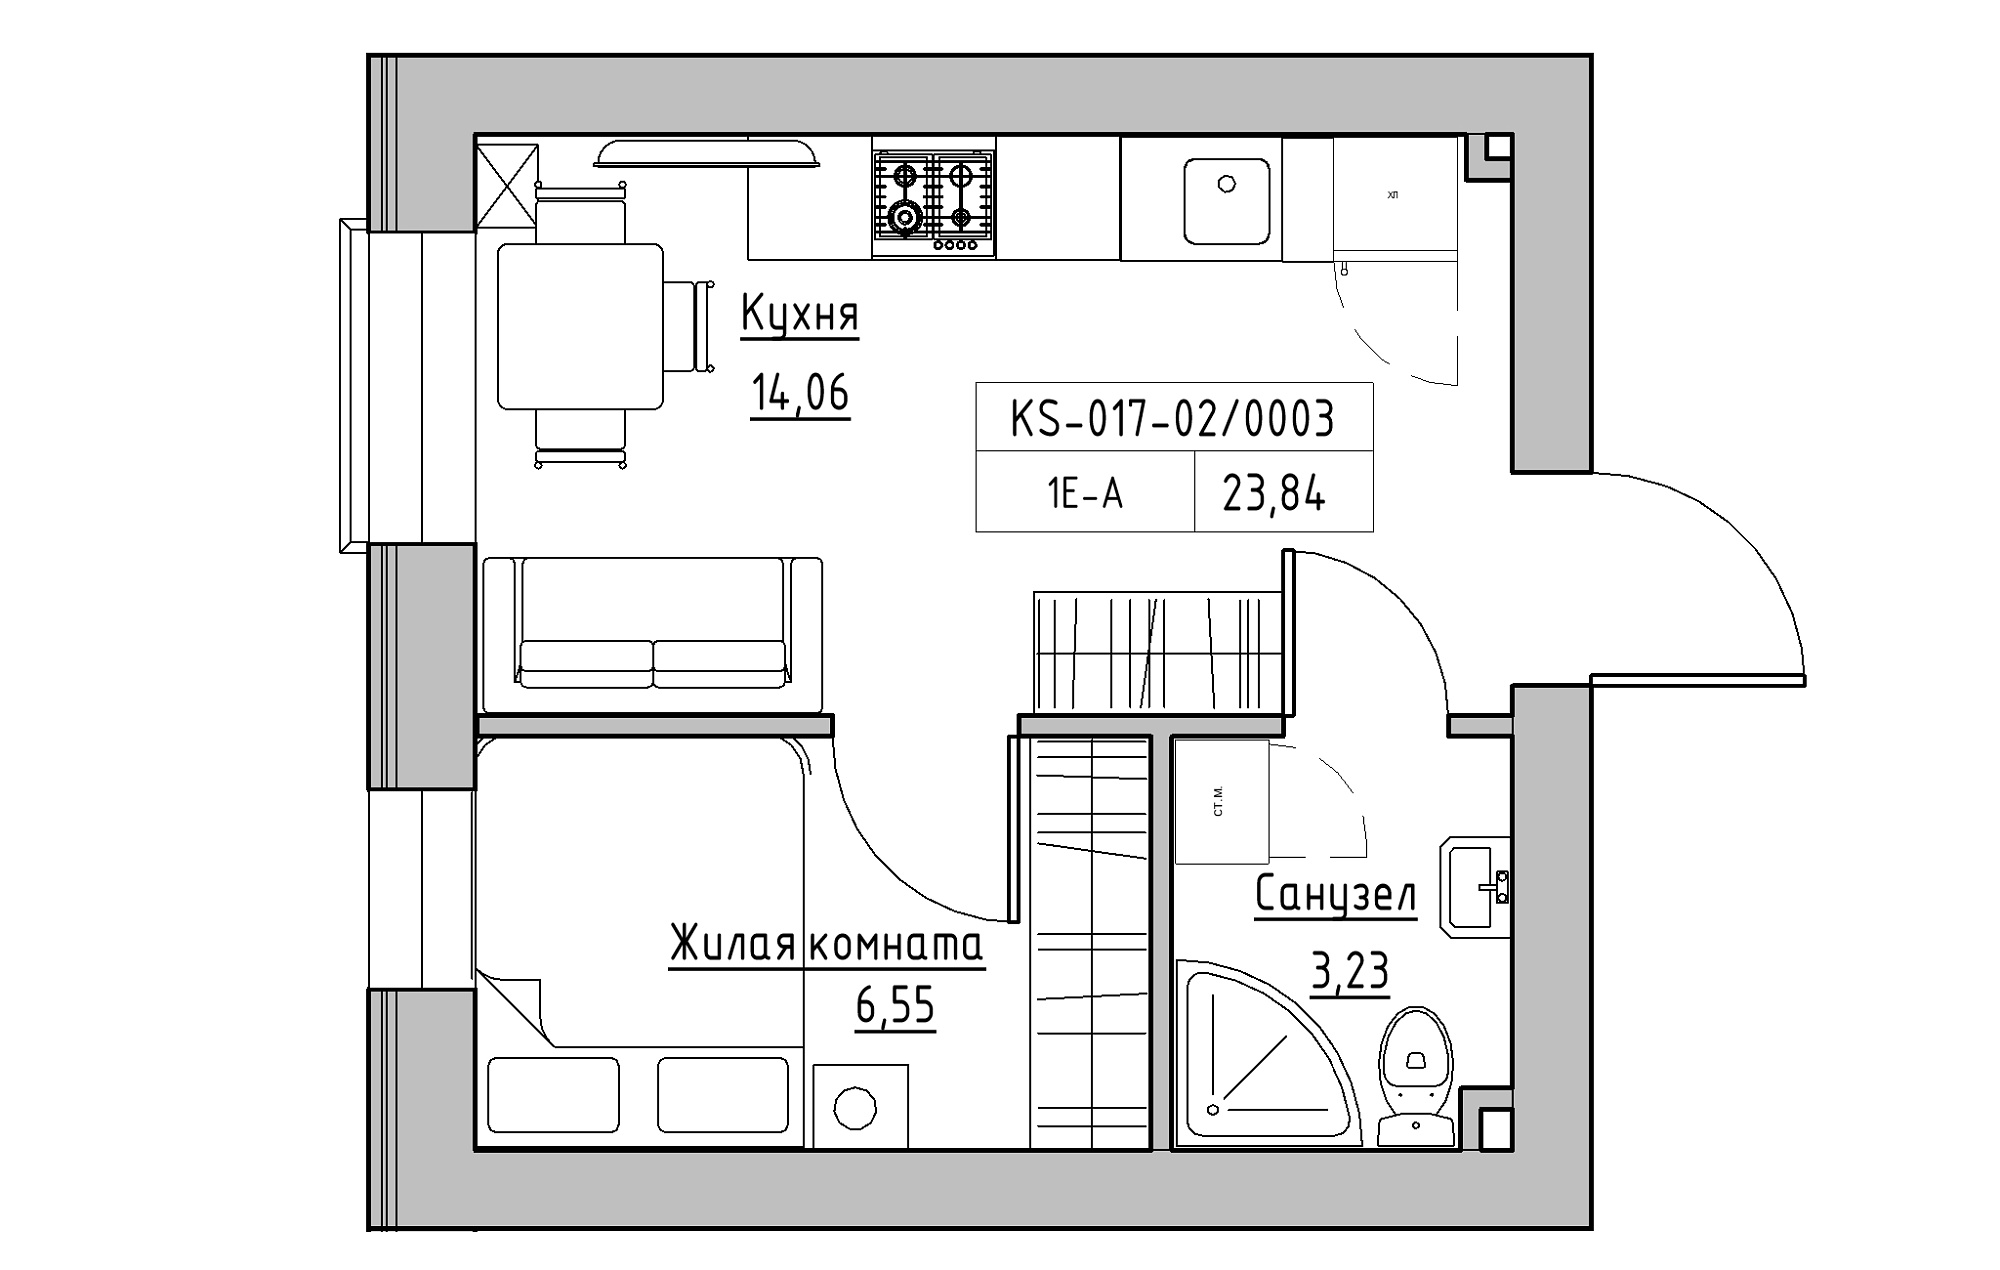 Planning 1-rm flats area 23.84m2, KS-017-02/0003.